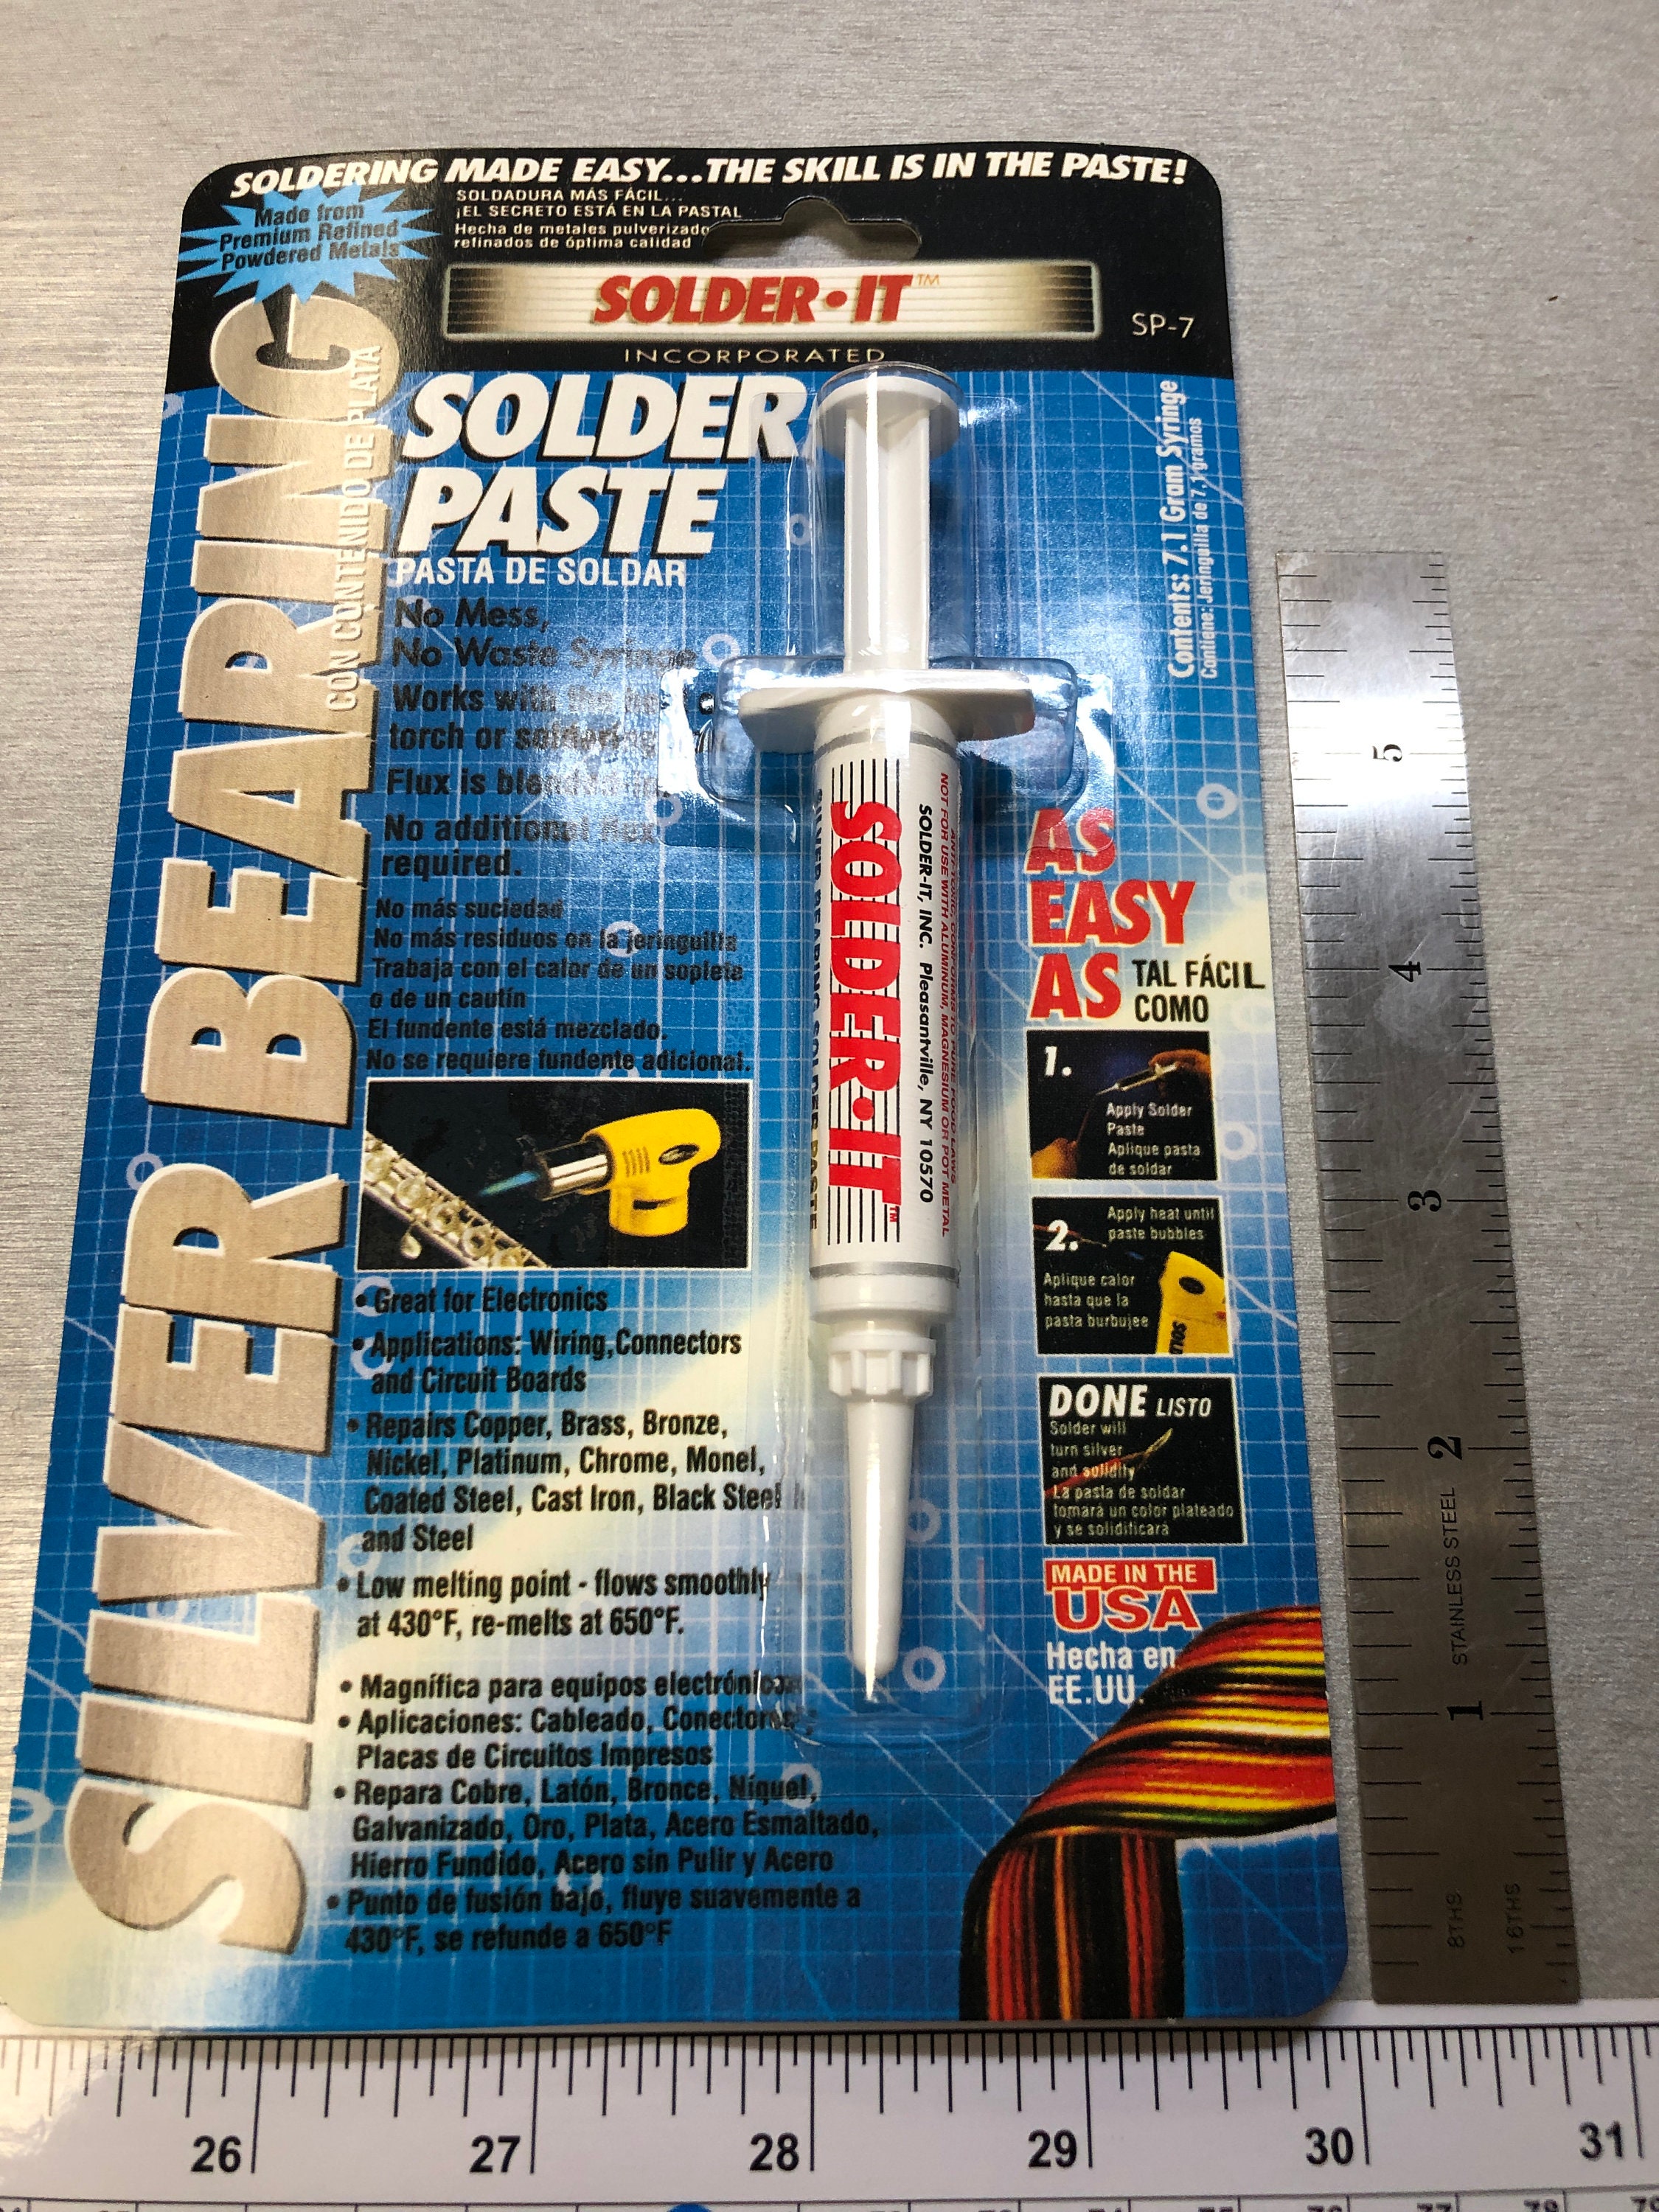 Solid 14K Gold Solder Wire Super Easy Easy medium Density .071 DWT